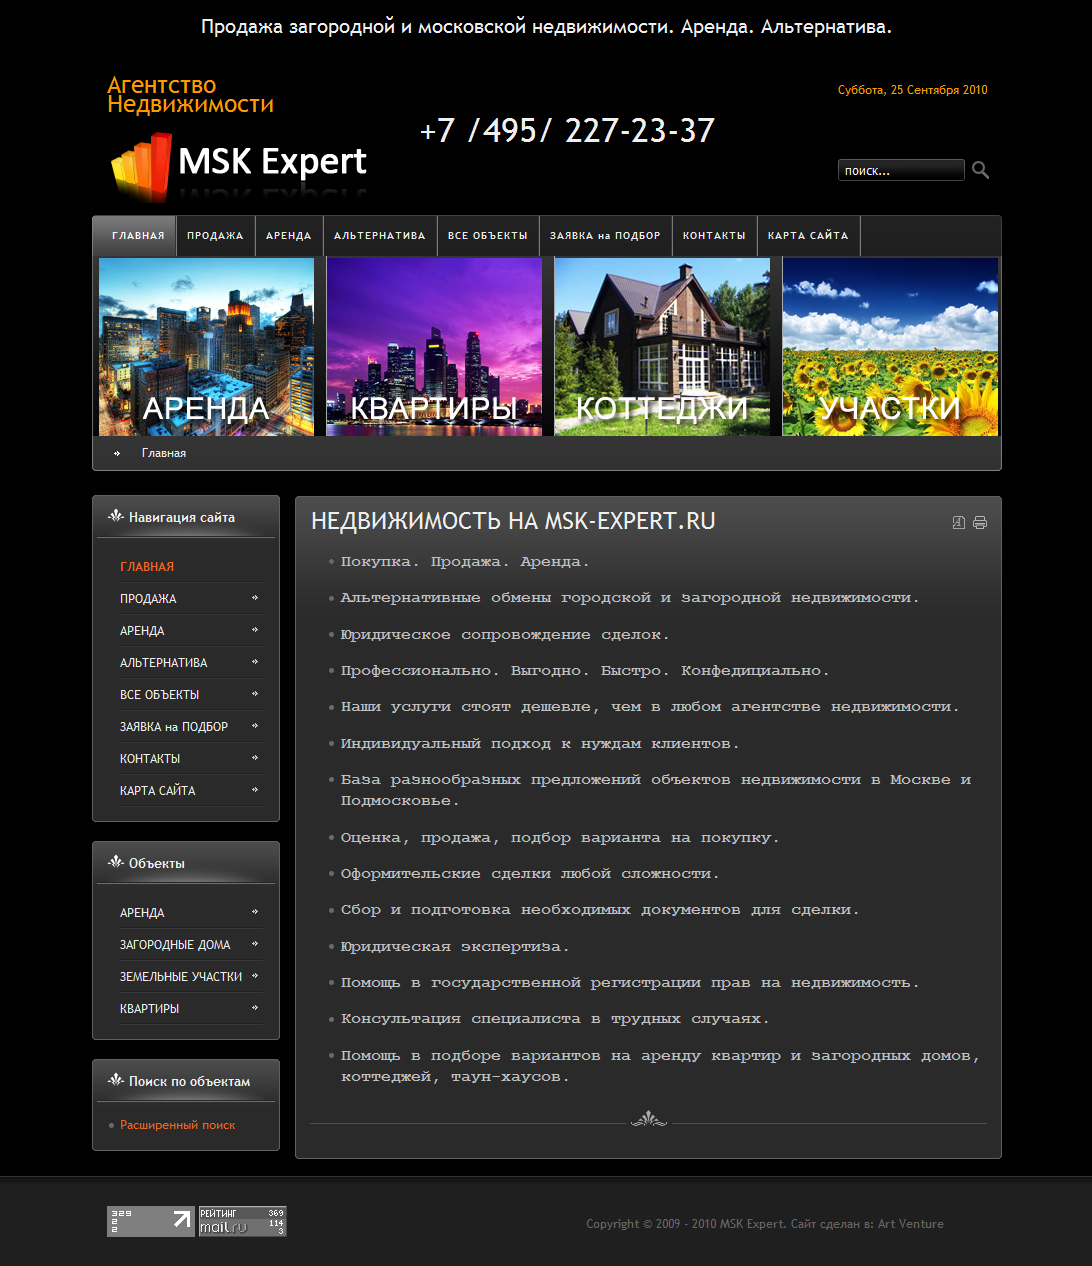 Веб-сайт агентства недвижимости MSK-Expert